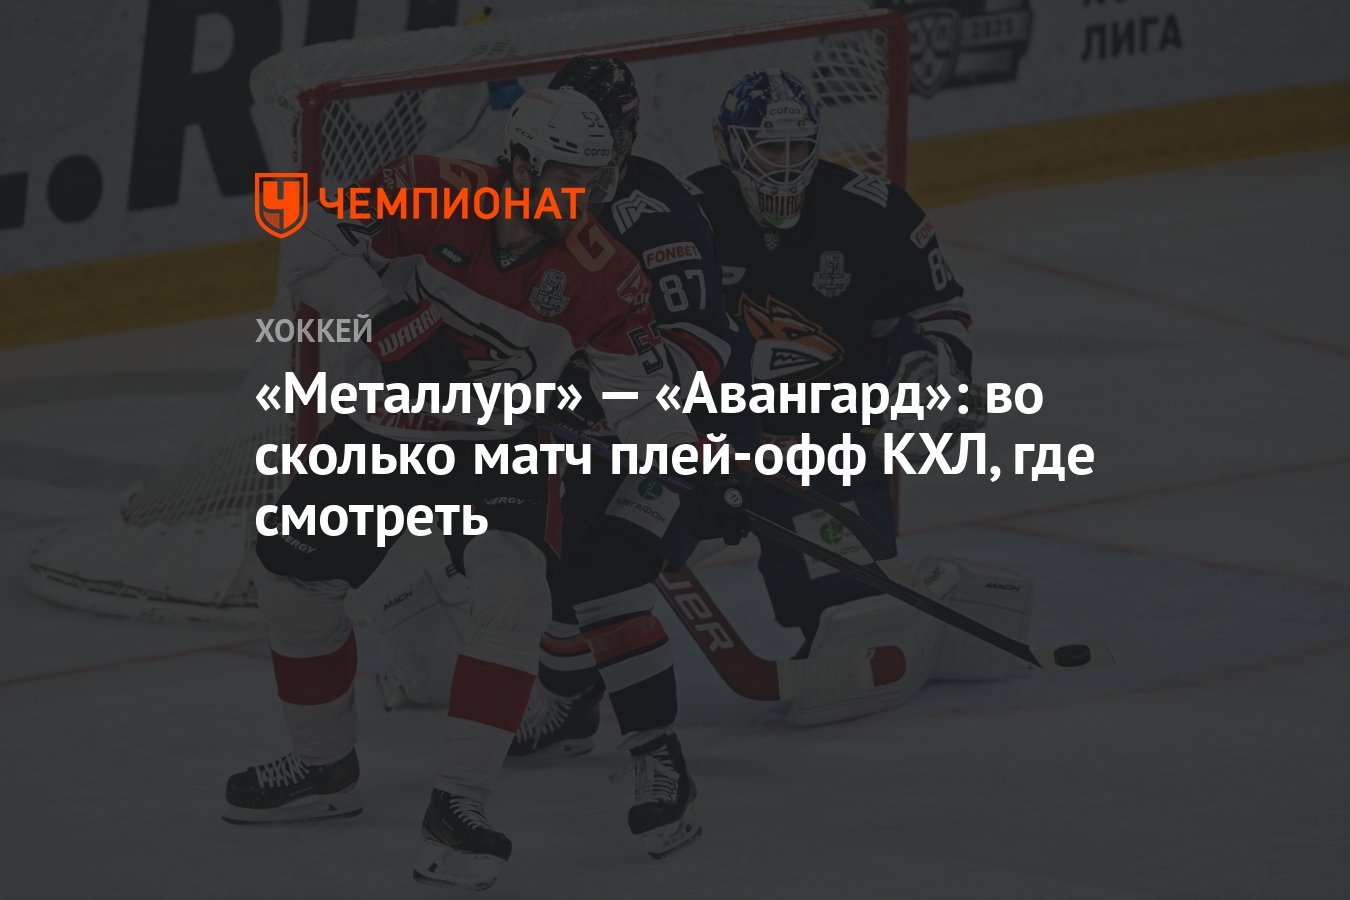 KHL где раздел подключения. Во сколько матч металлург